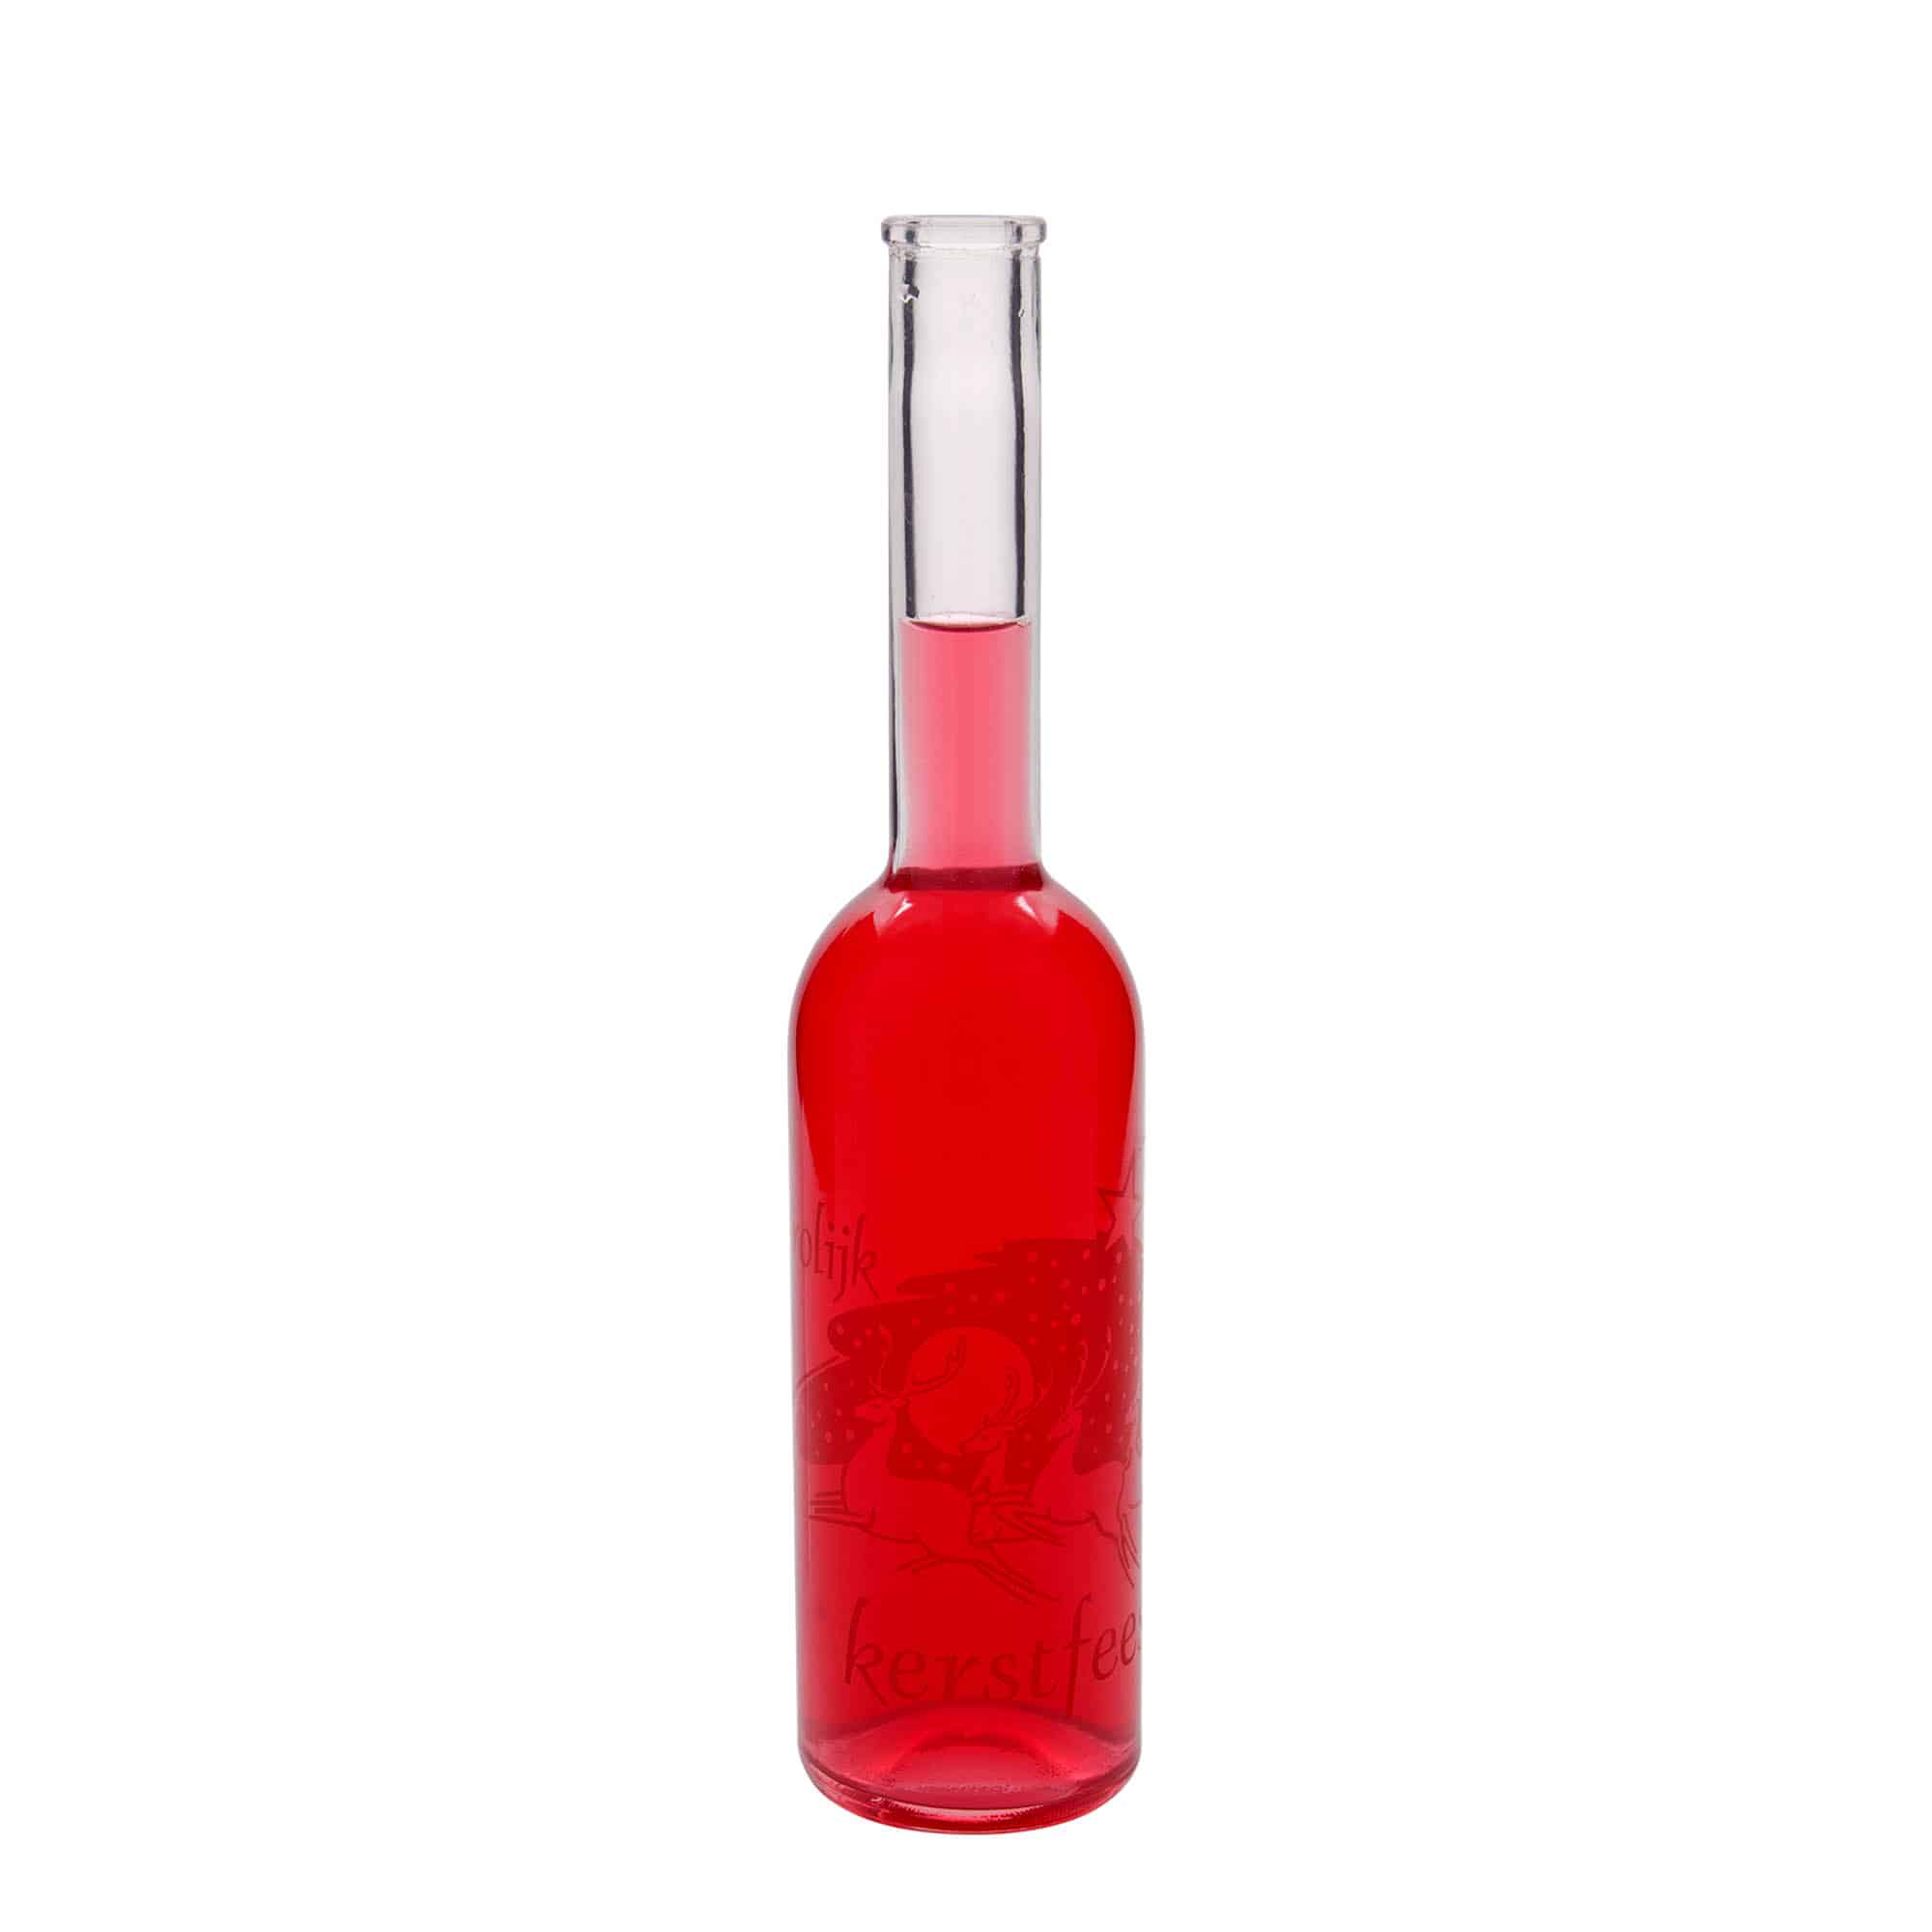 500 ml glass bottle 'Opera', print: Rendieren, closure: cork